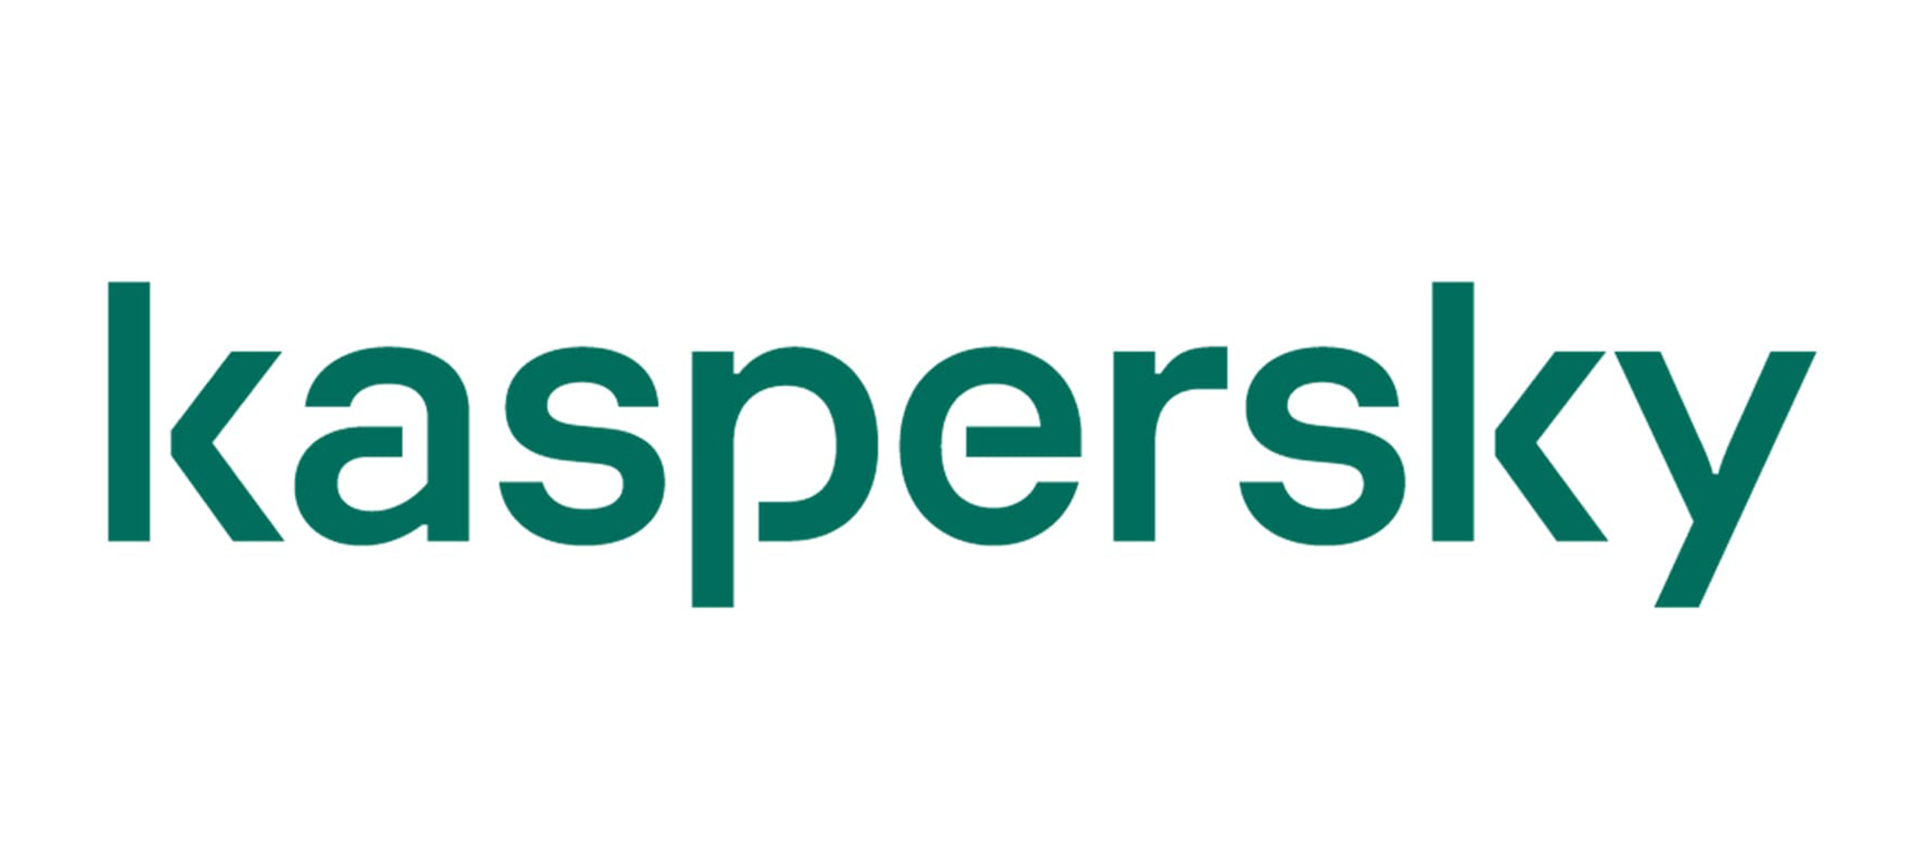 Kaspersky logo 1